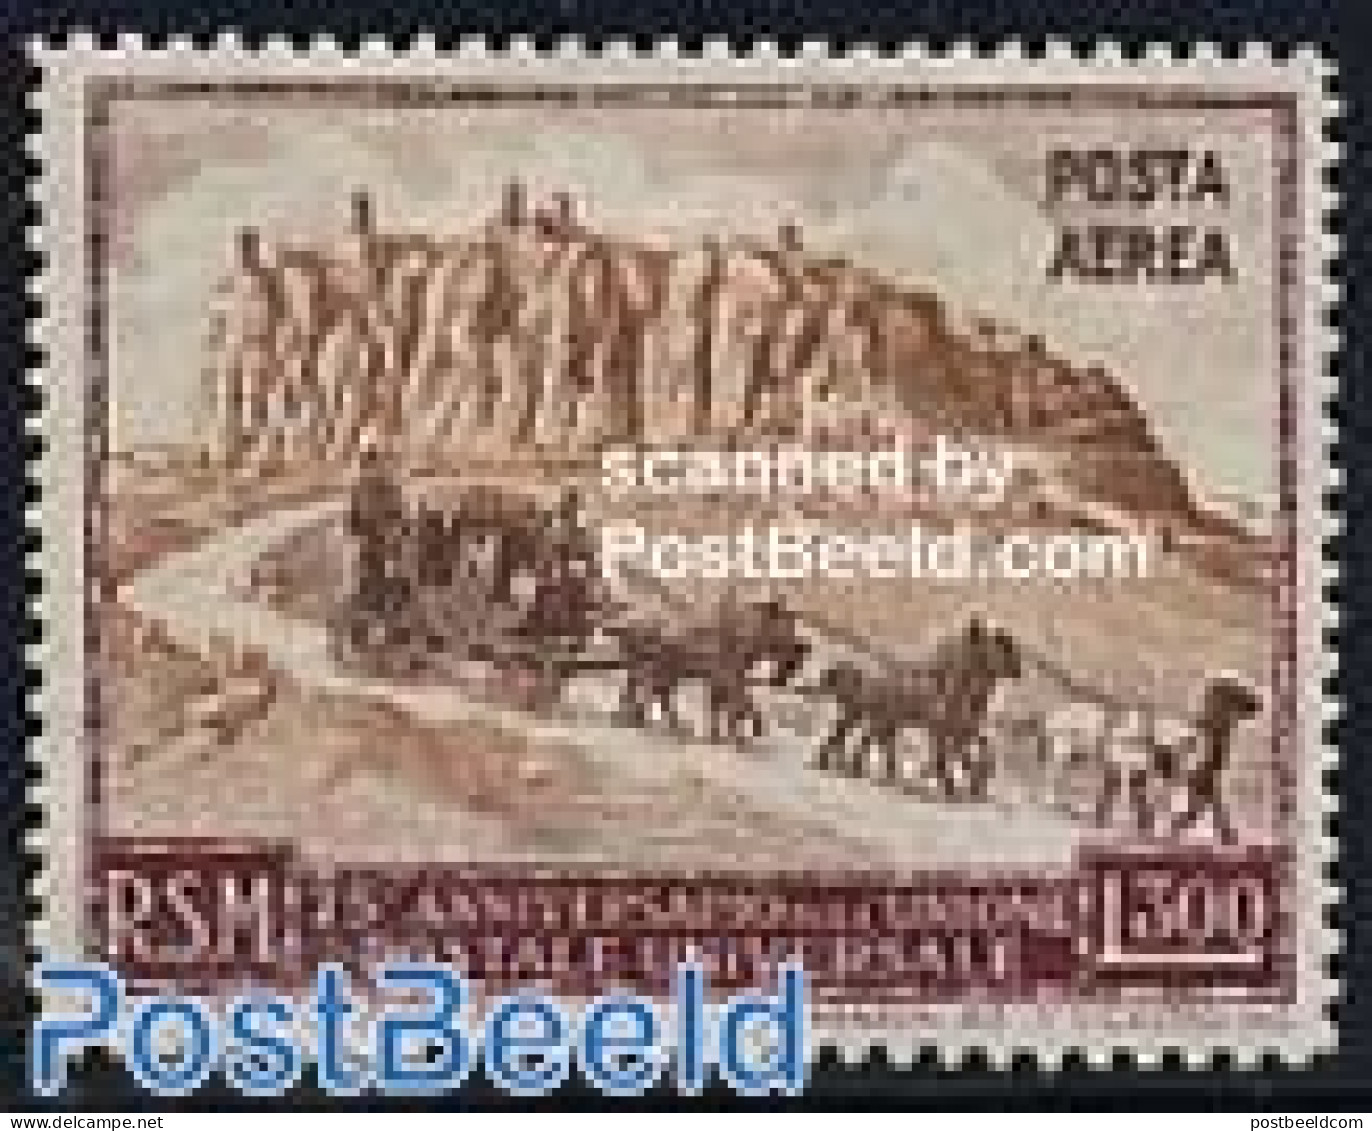 San Marino 1951 75 Years UPU 1v, Mint NH, Nature - Transport - Horses - U.P.U. - Coaches - Unused Stamps